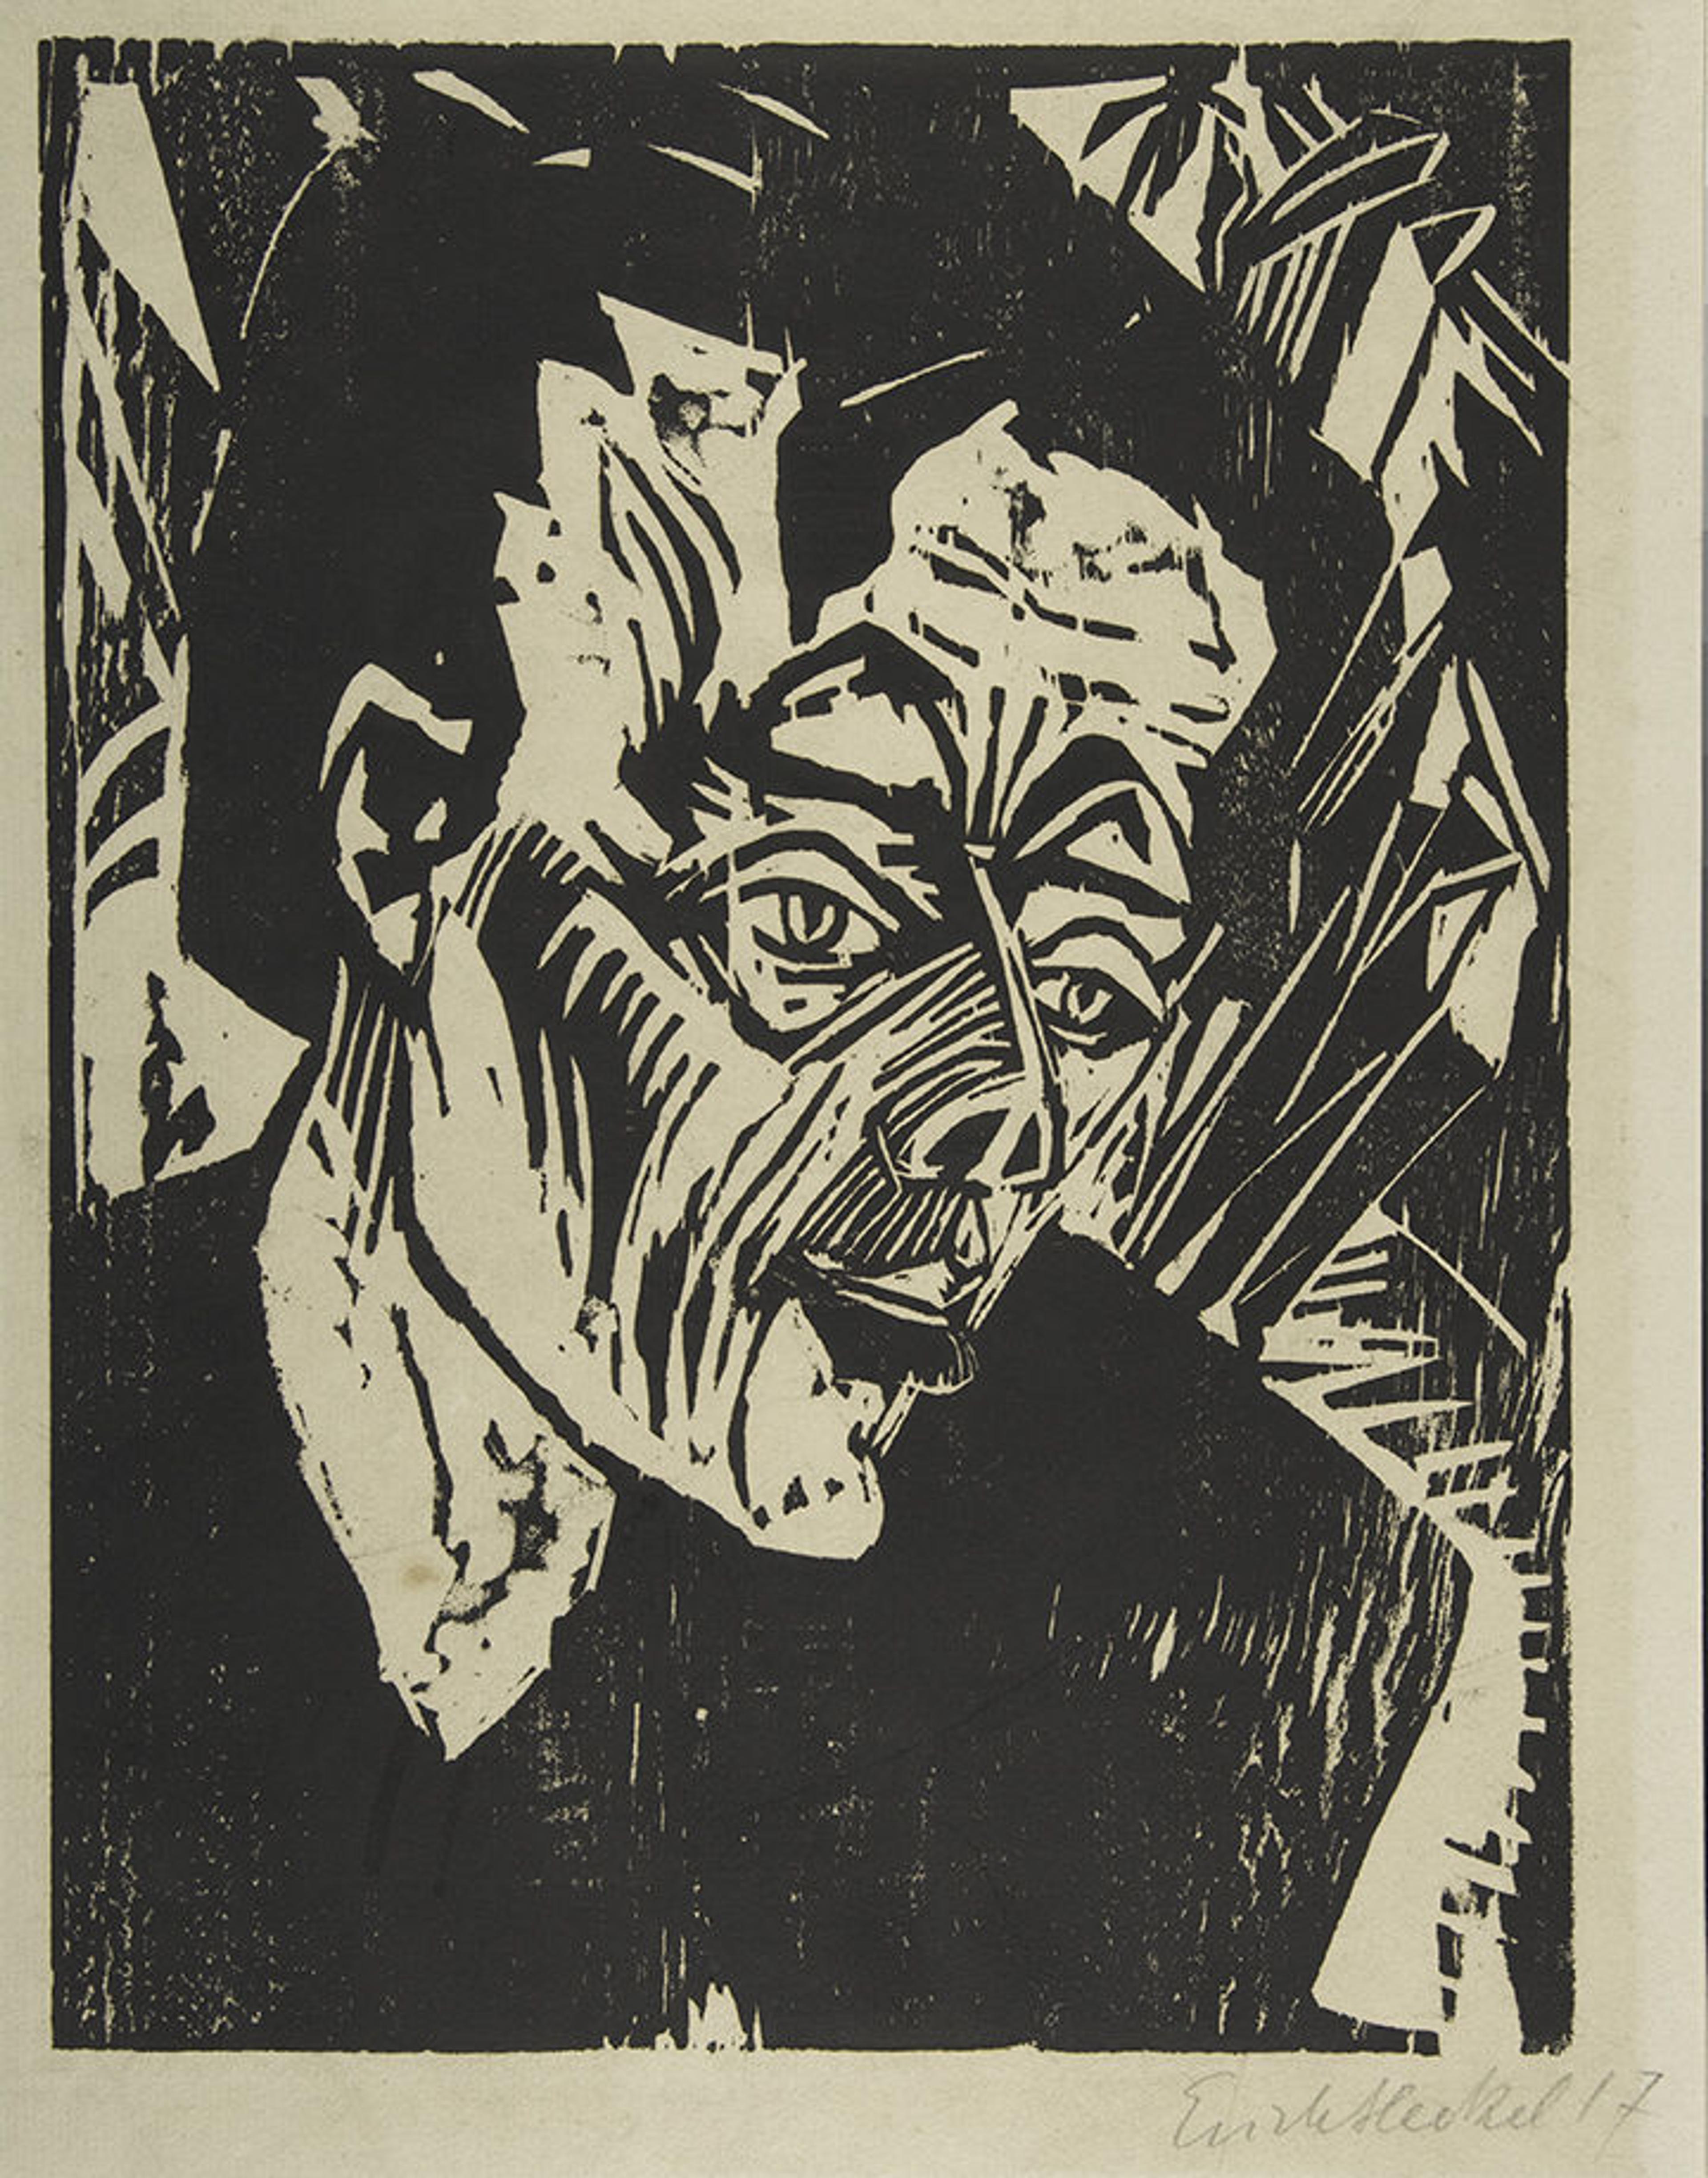 Erich Heckel's 1917 print Roquairol